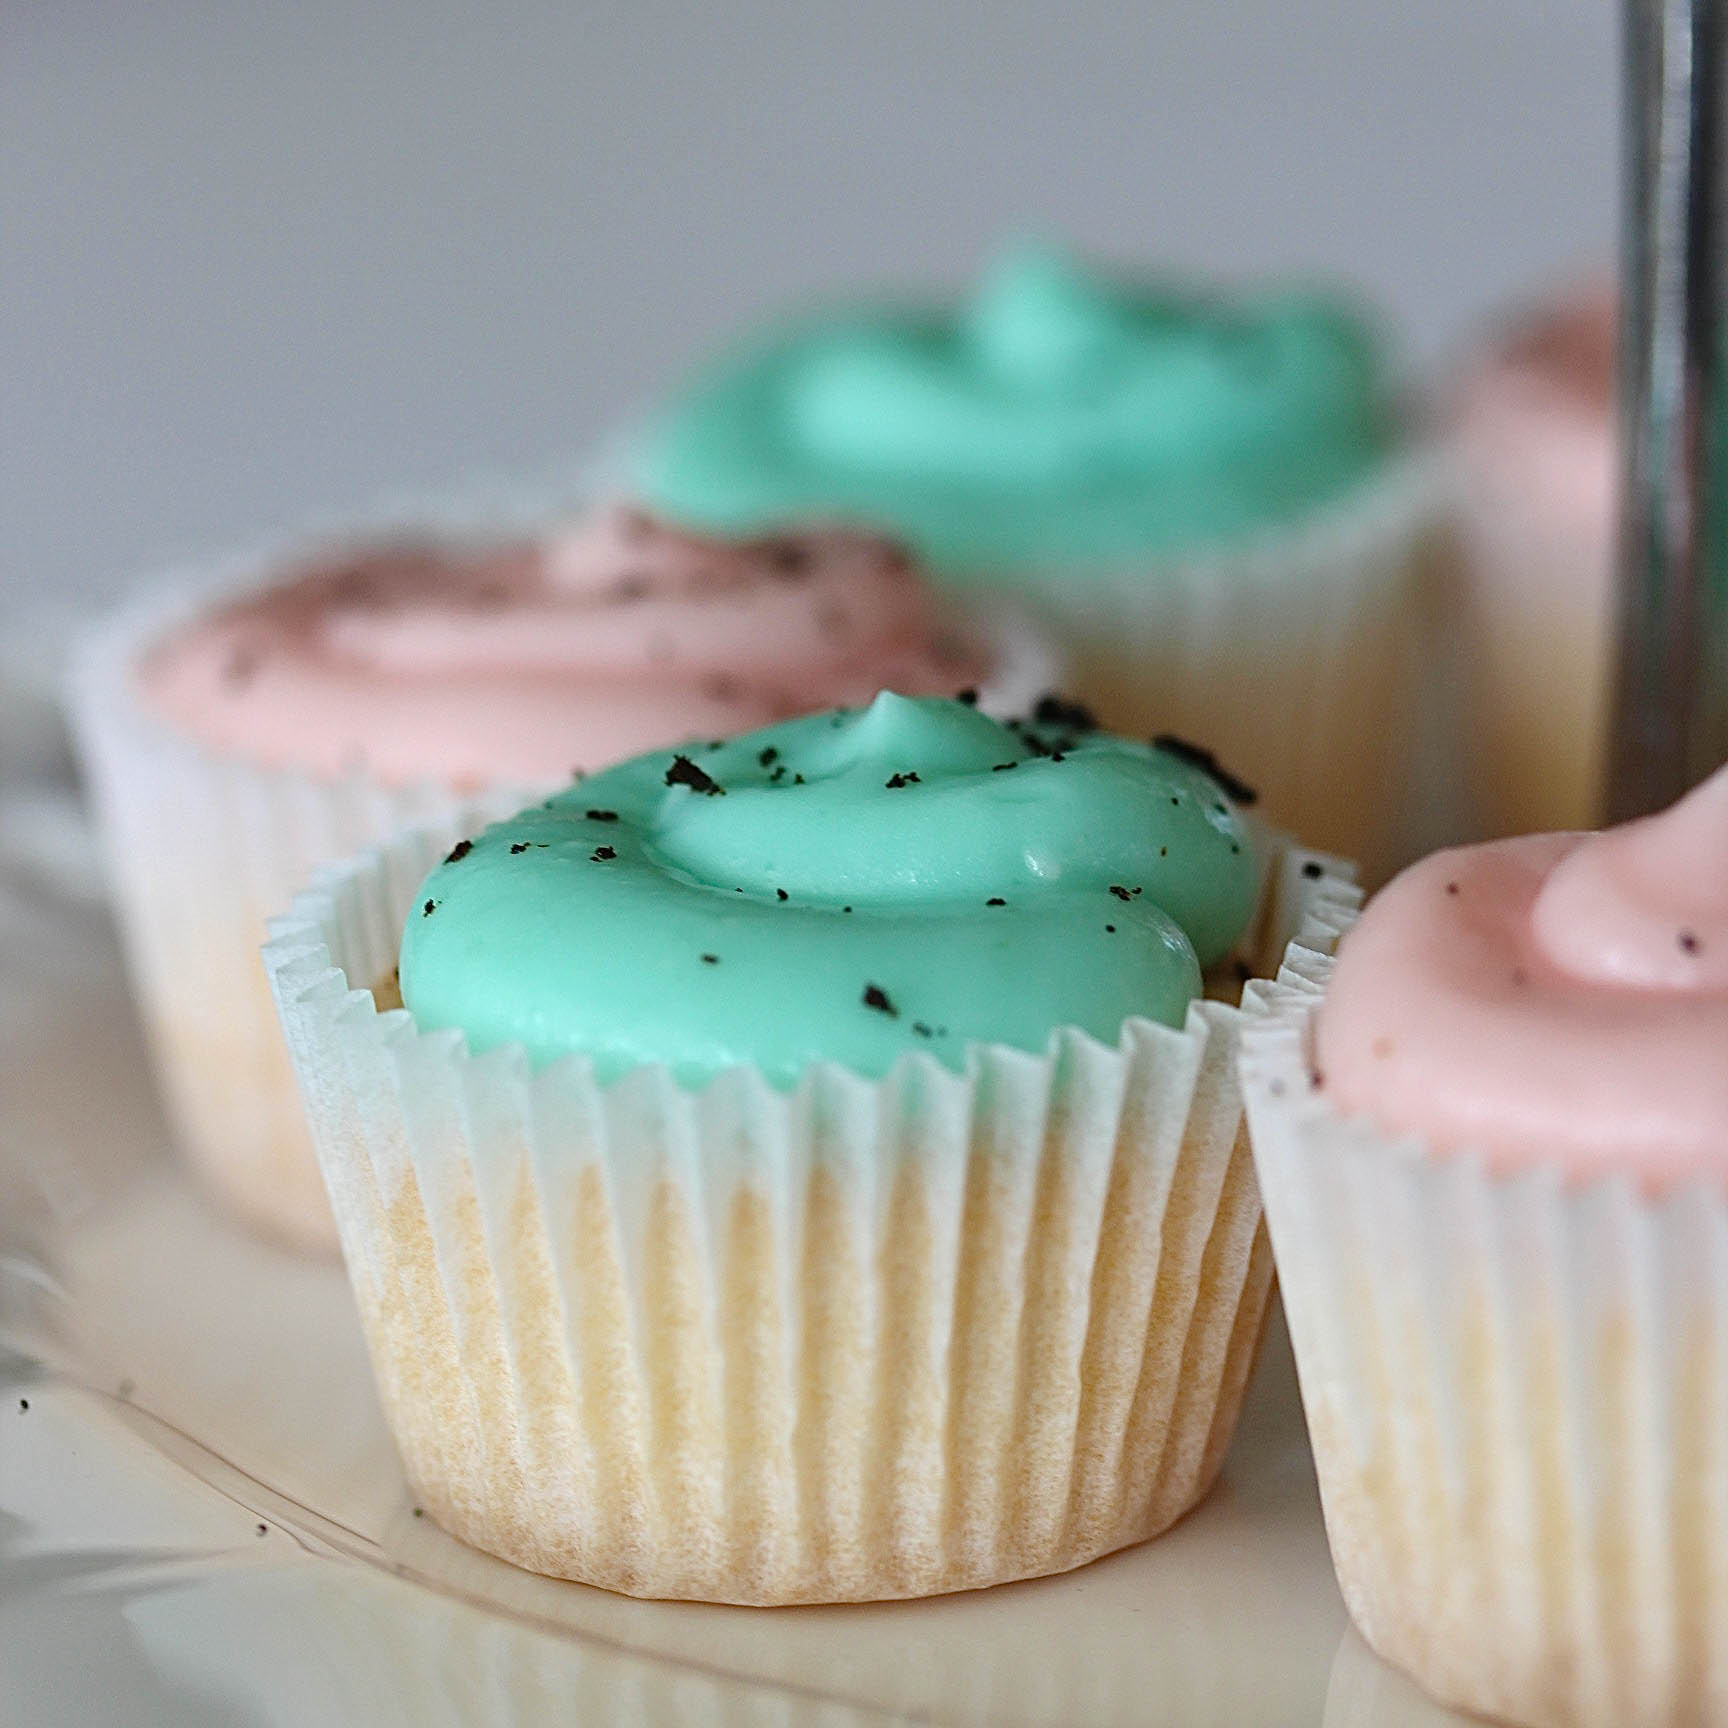 Süße Mini Vanille Cupcakes mit pastelligem Frosting Rezept Ostern Babyparty Babyshower Kindergeburtstag backen #cupcakes #ostern #babyshower #kindergeburtstag Backblog Foodfotografie Foodblog | Emma´s Lieblingsstücke